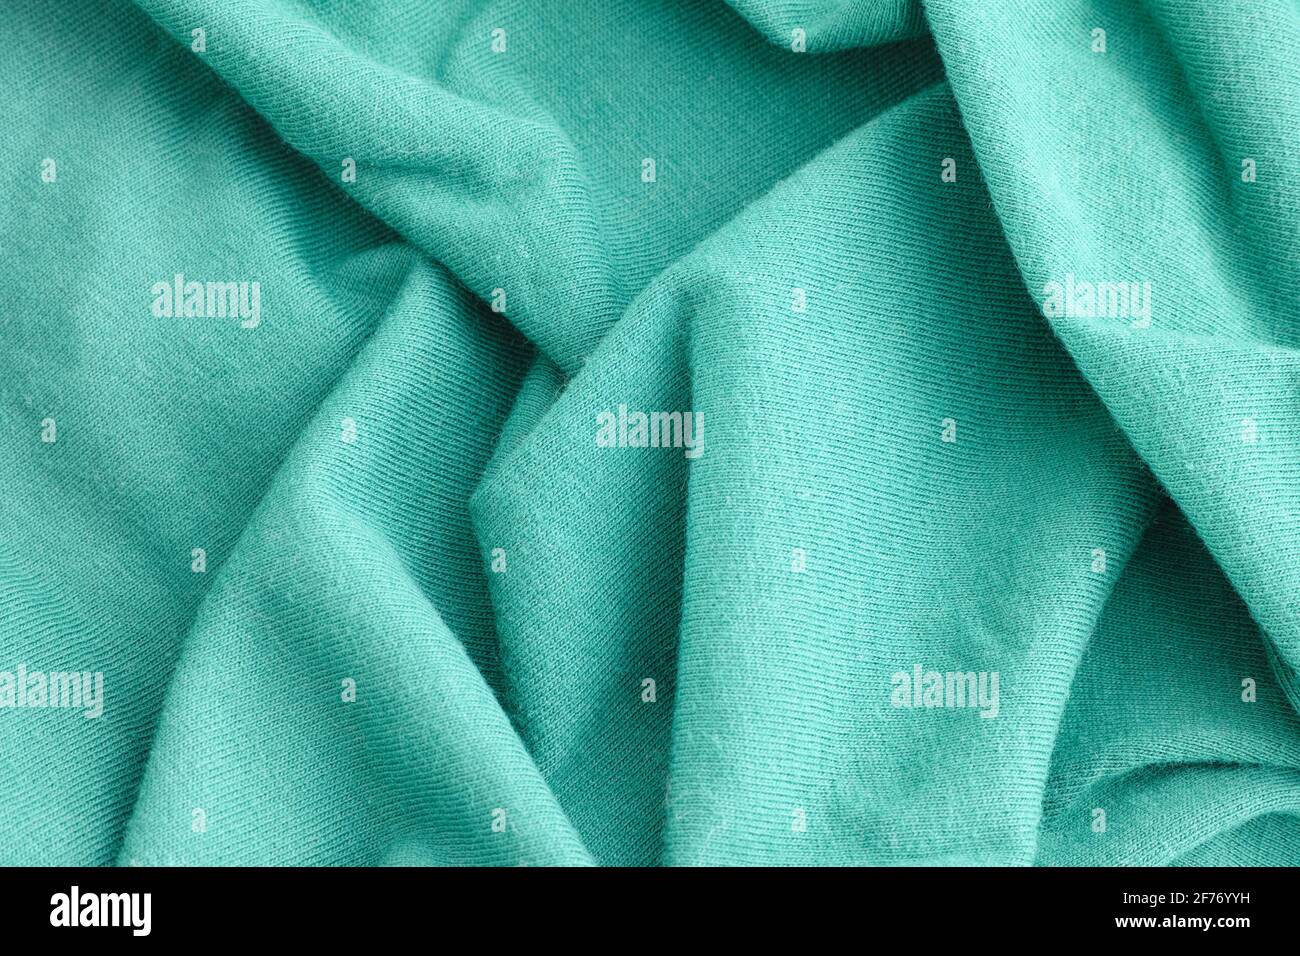 Cyan crumpled fabric texture background. Close up. Stock Photo